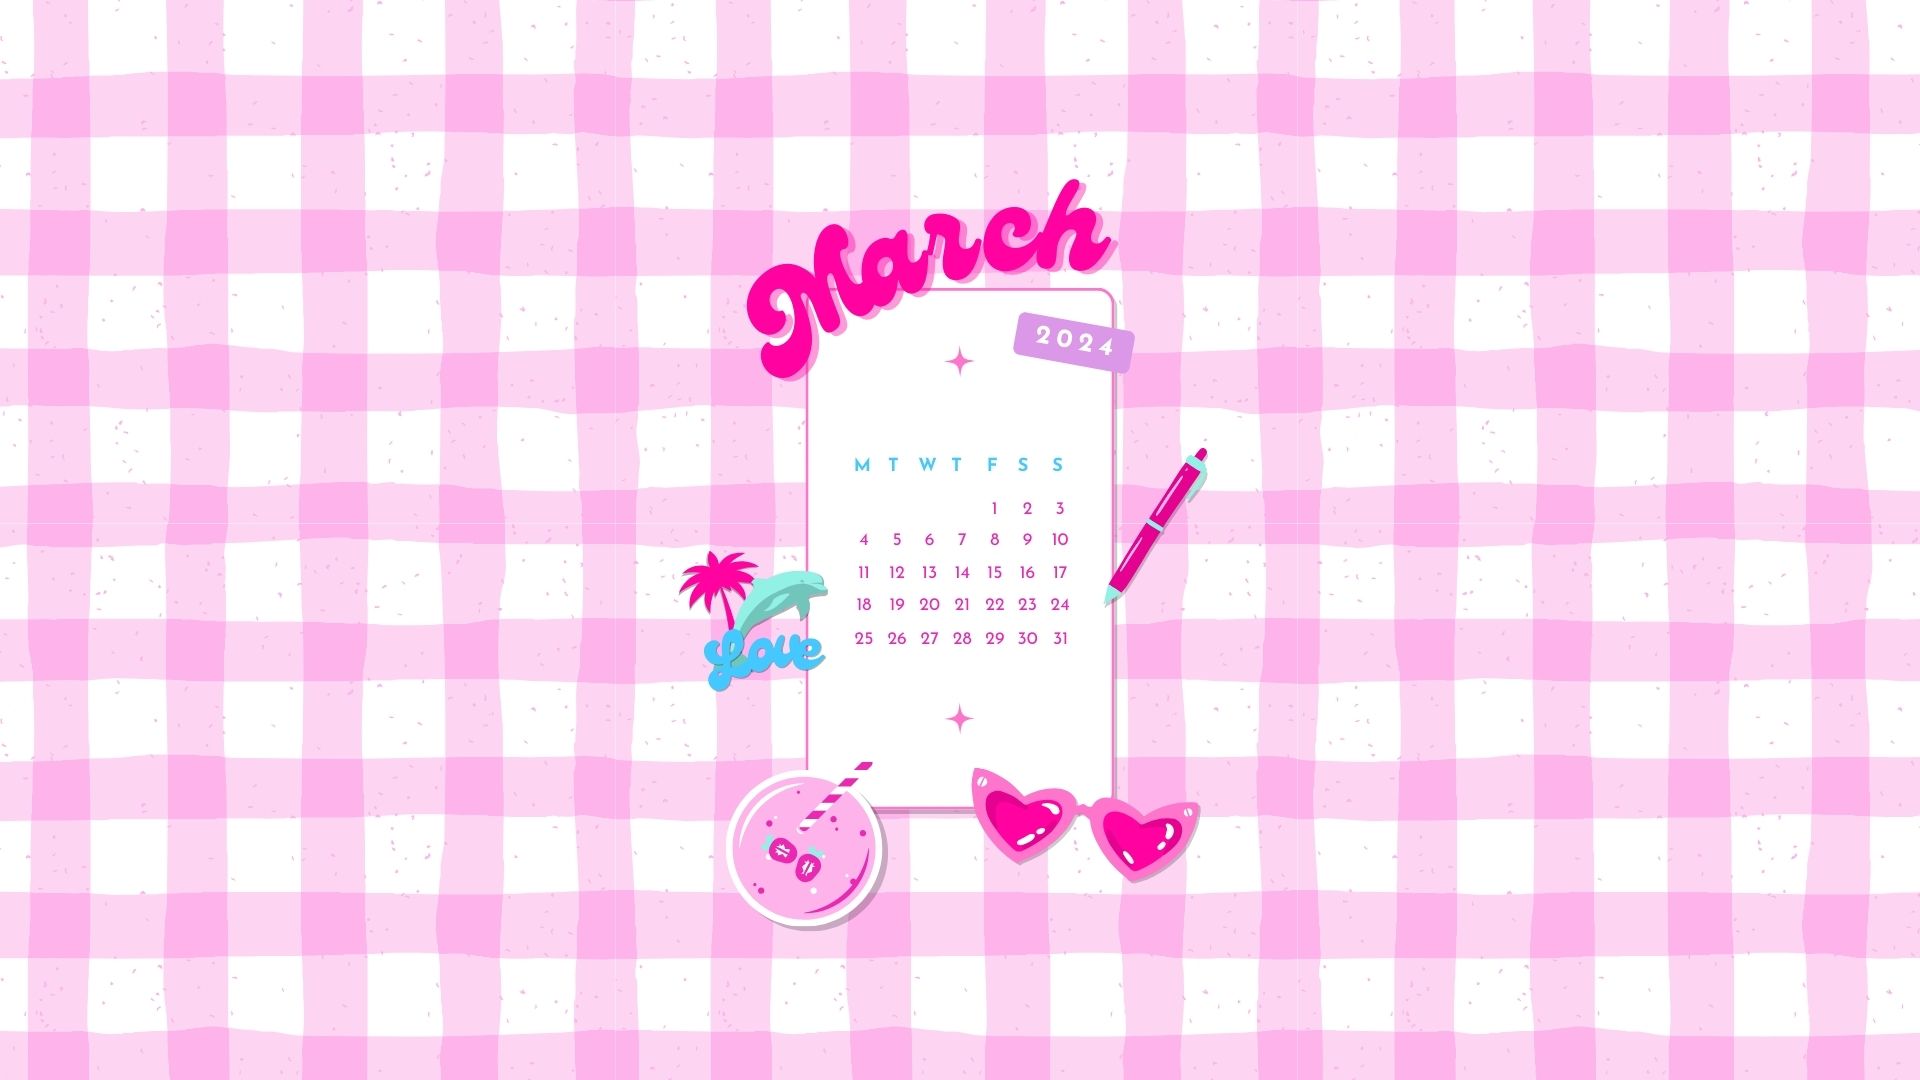 march 2024 barbiecore aesthetic desktop background wallpaper calendar